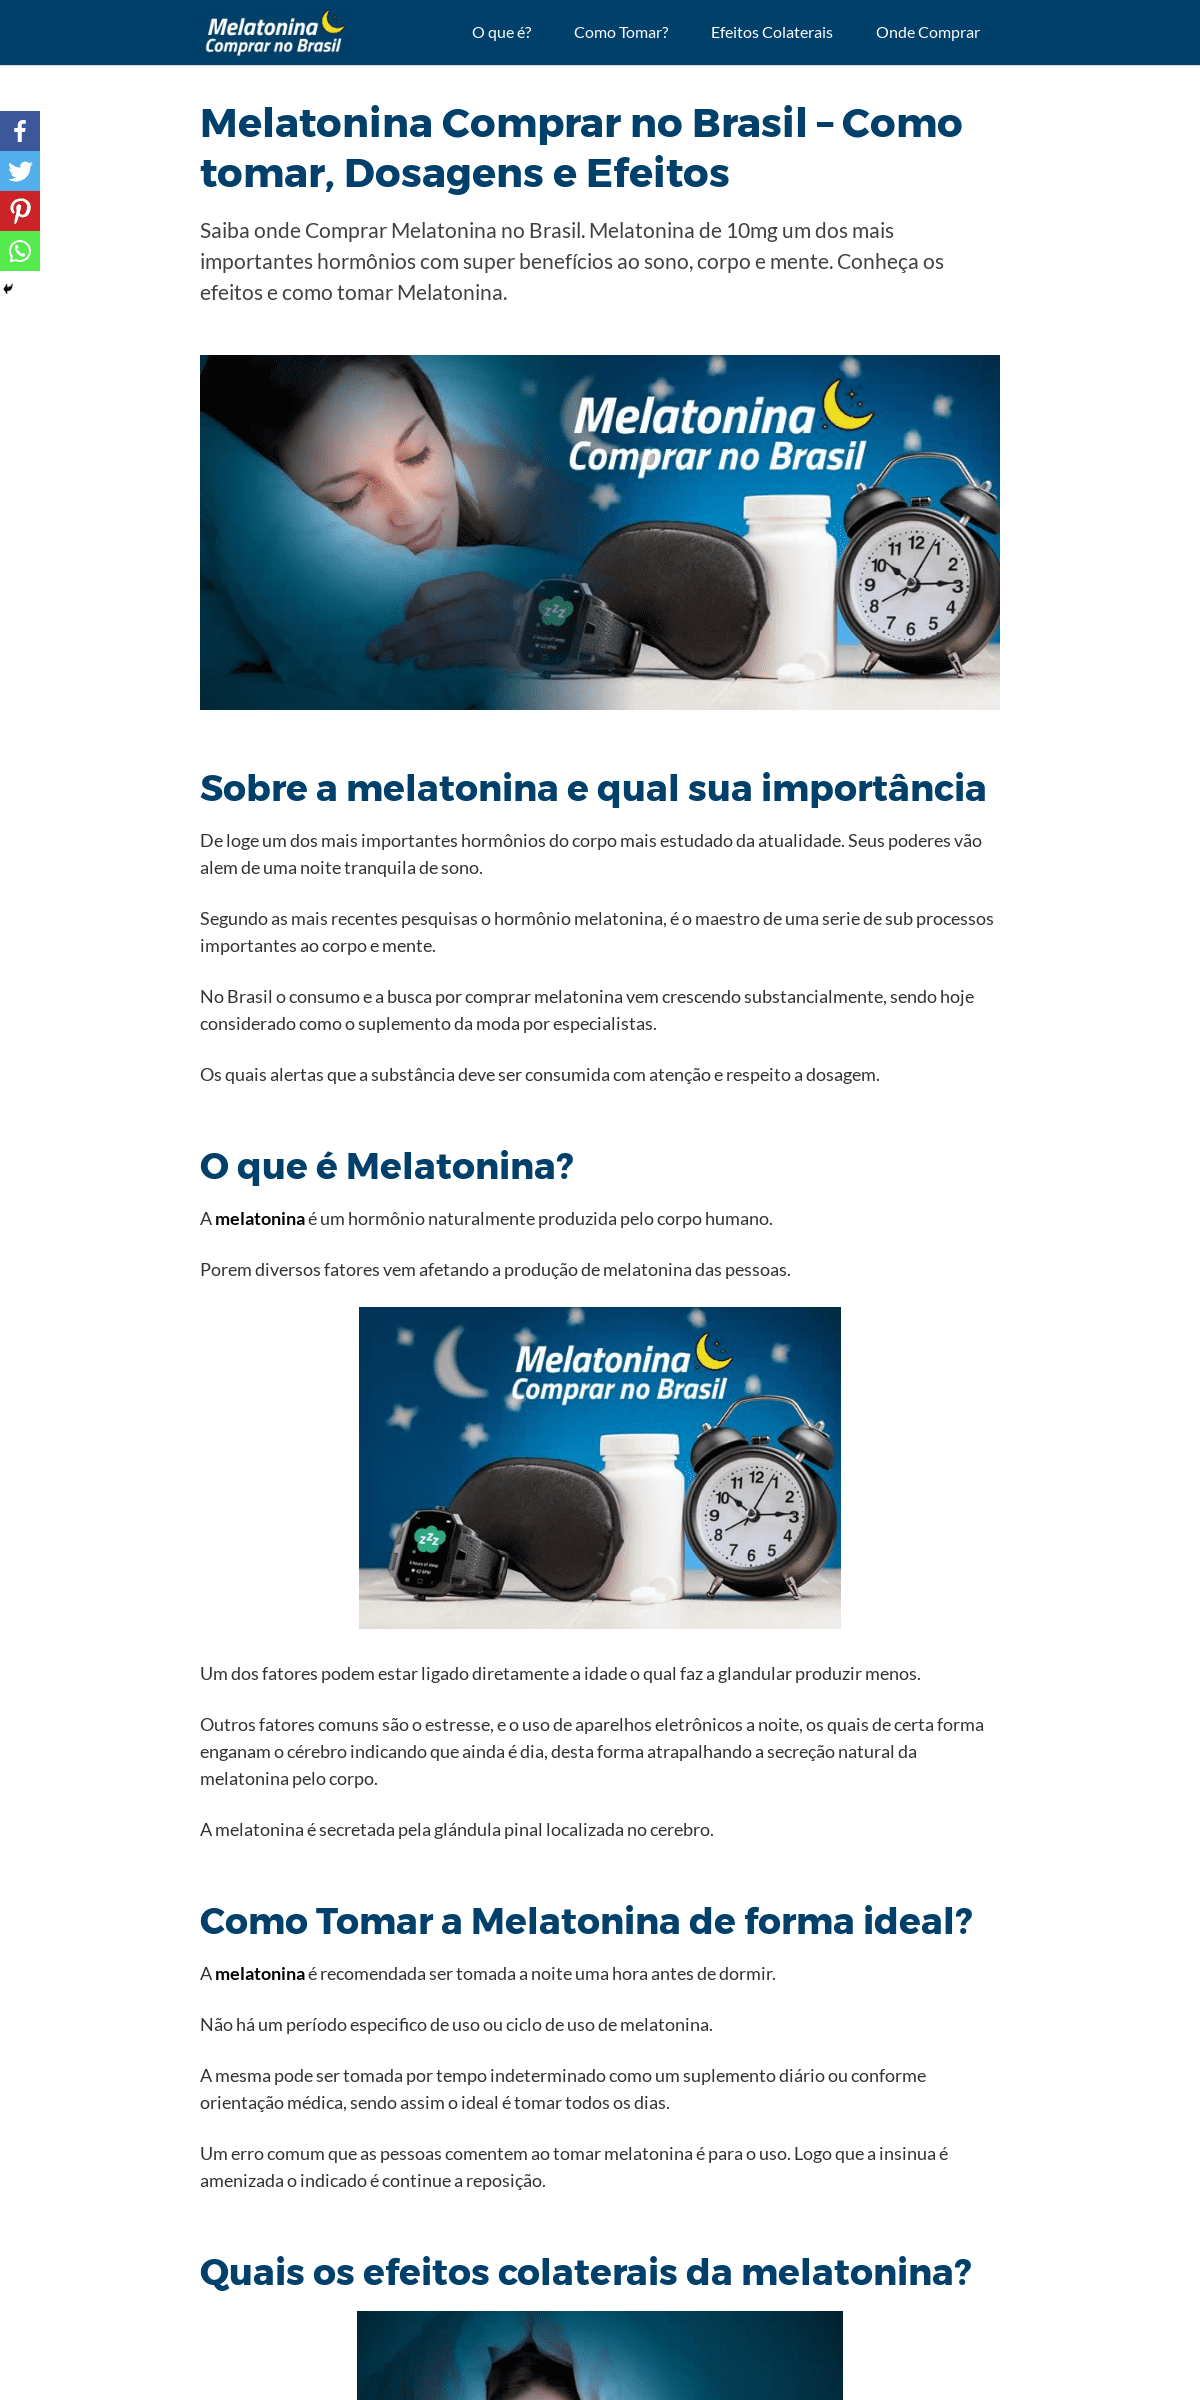 A complete backup of melatoninacomprarnobrasil.com